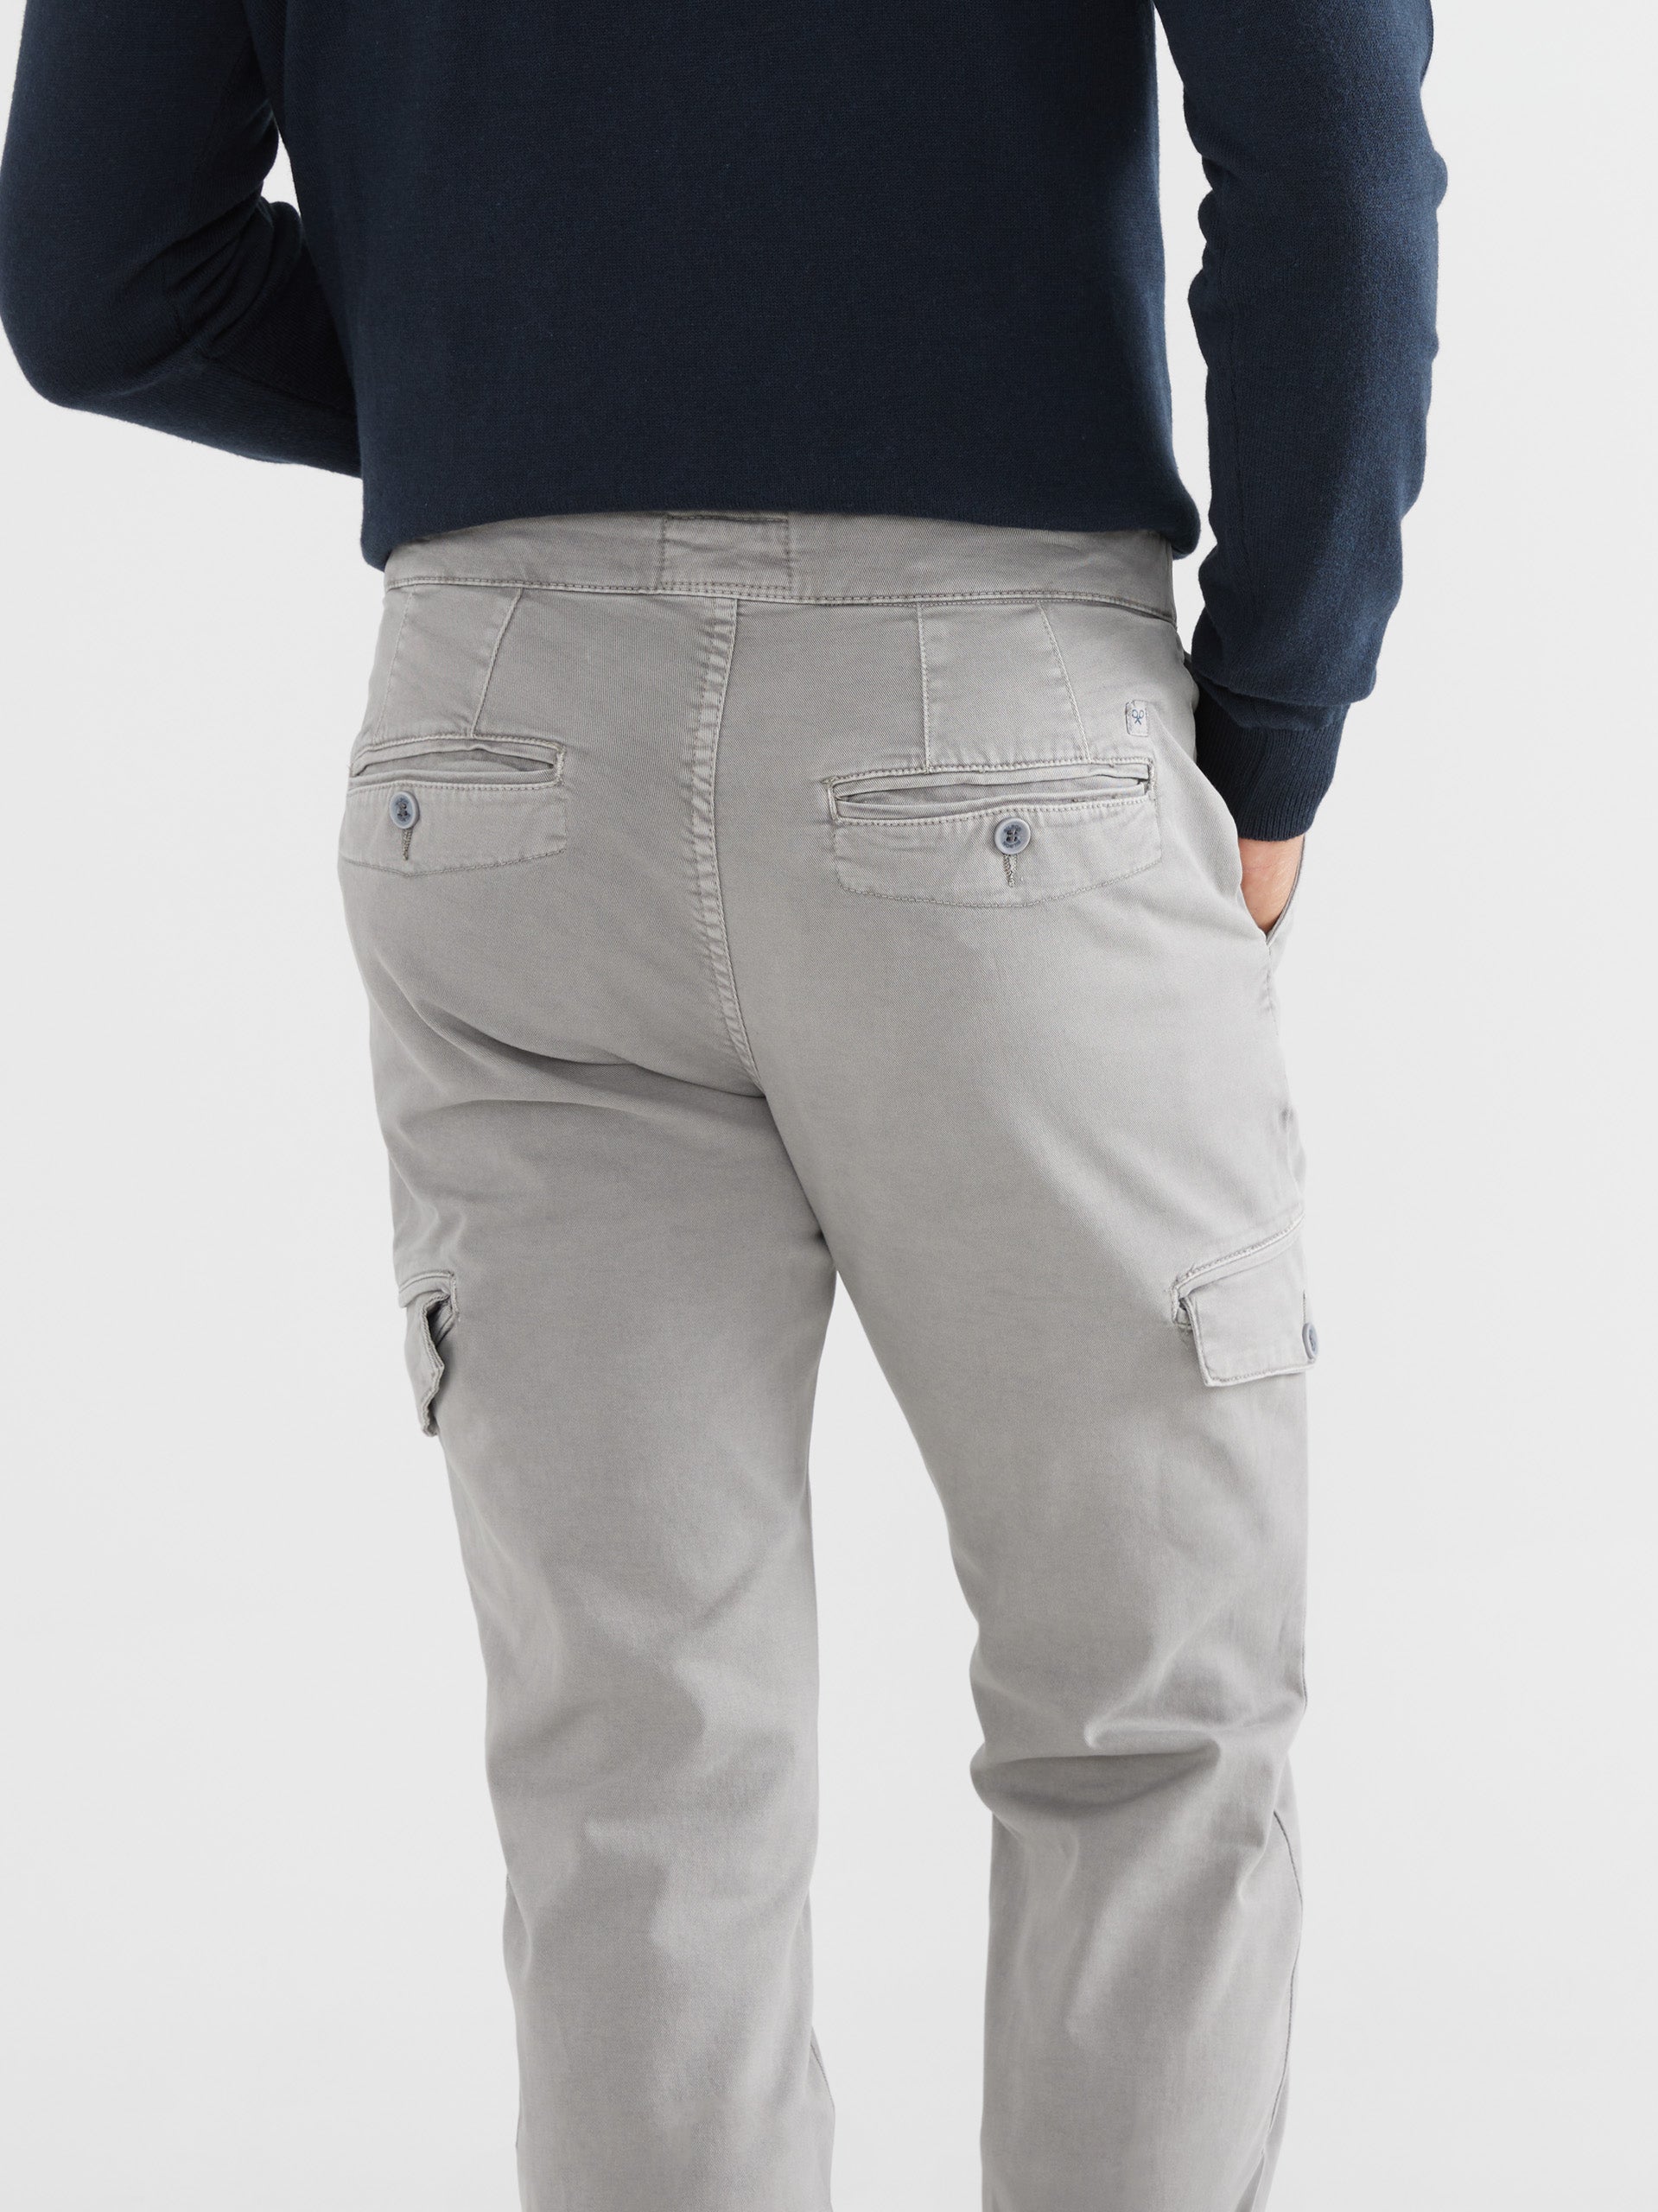 Gray cargo jogger sport pants